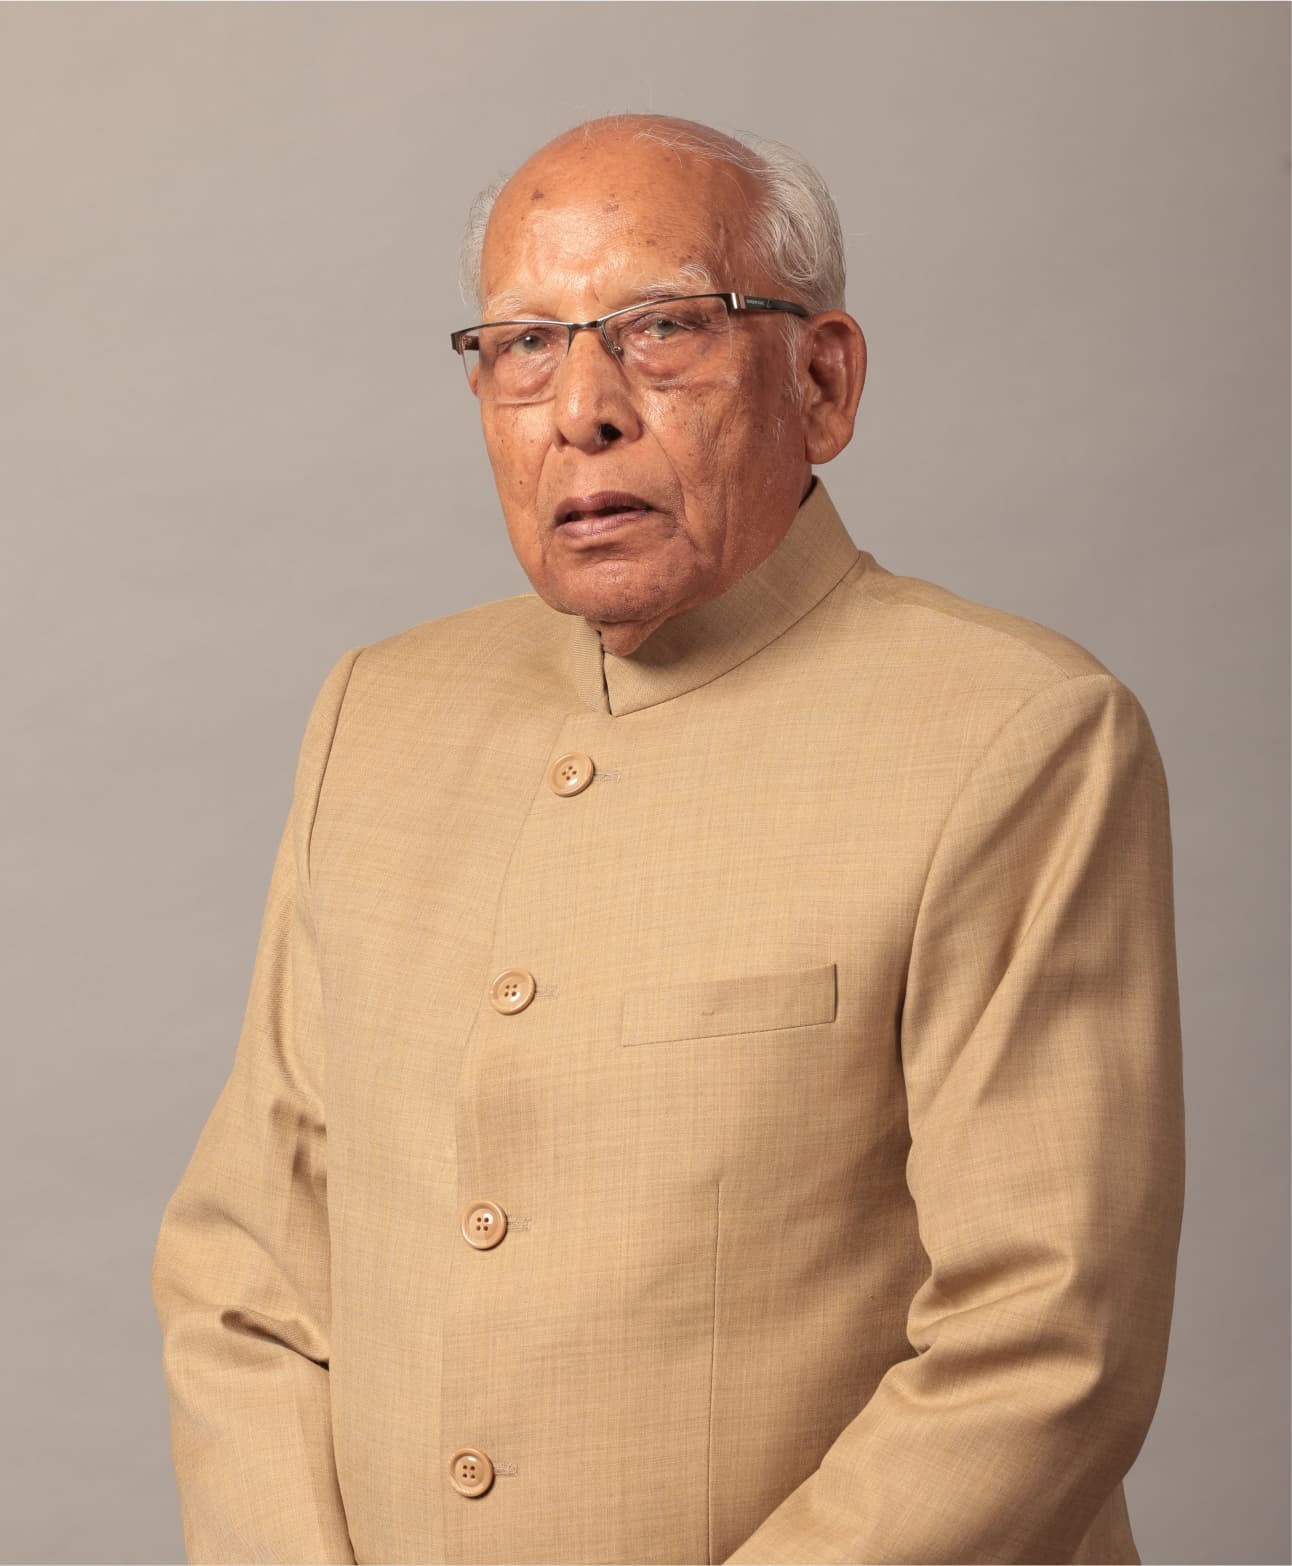 Nand Kishore Jain